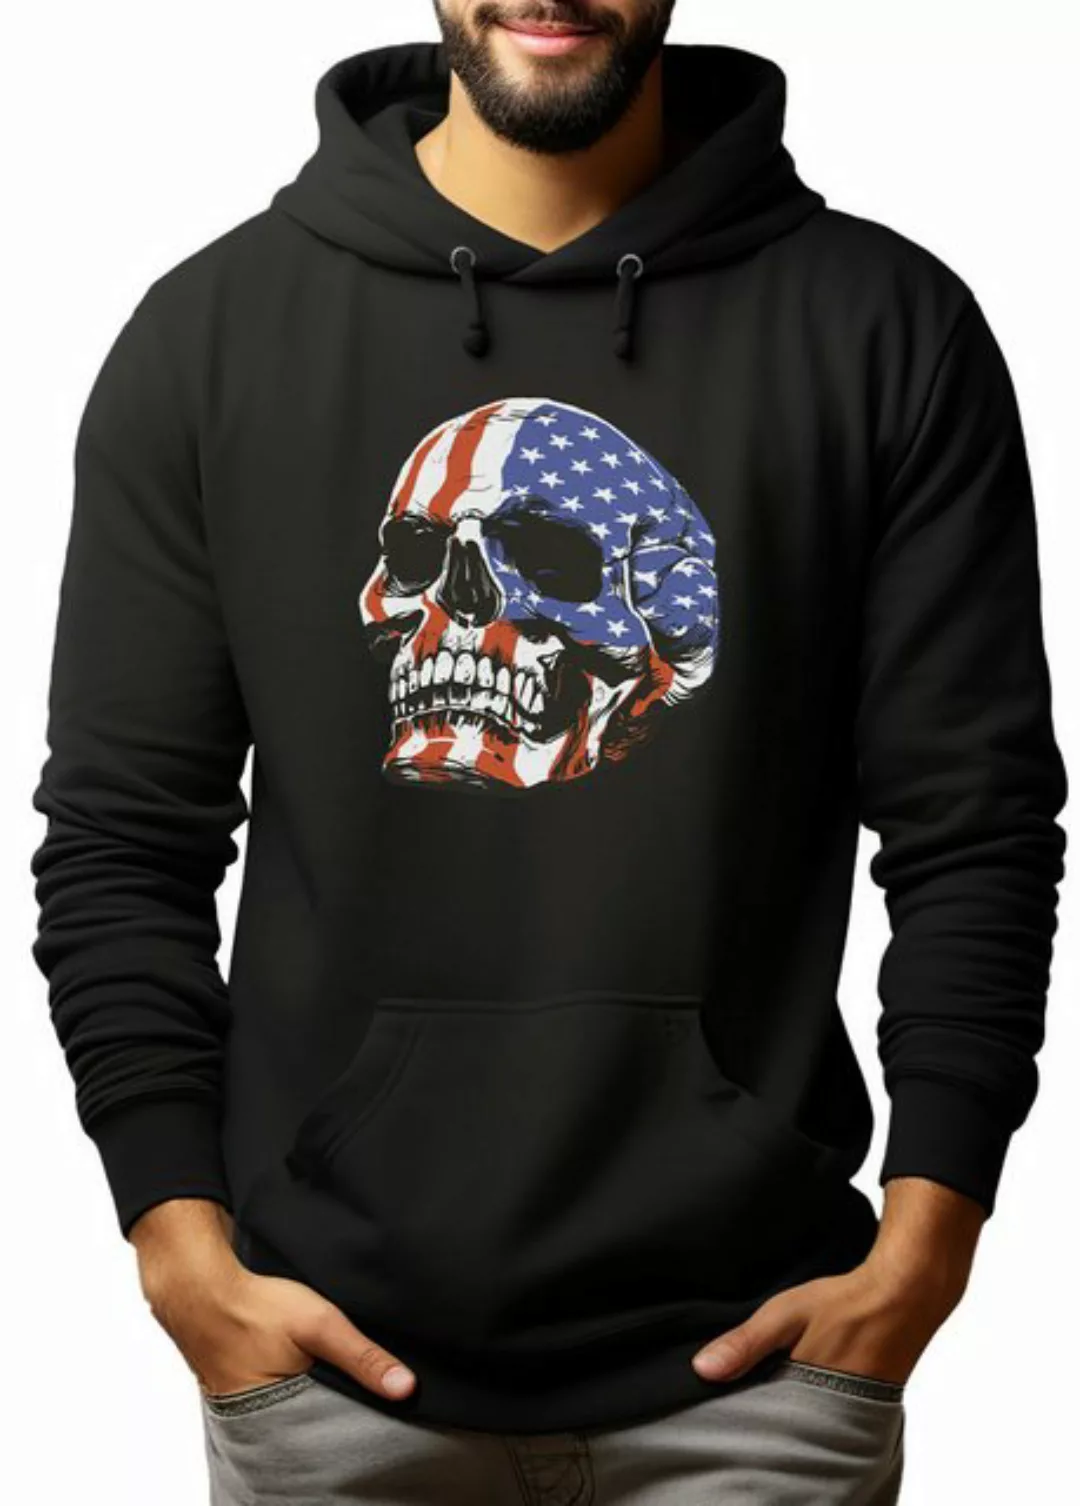 MyDesign24 Hoodie Herren Kapuzen Sweatshirt - Skull Schädel in USA Flaggen günstig online kaufen